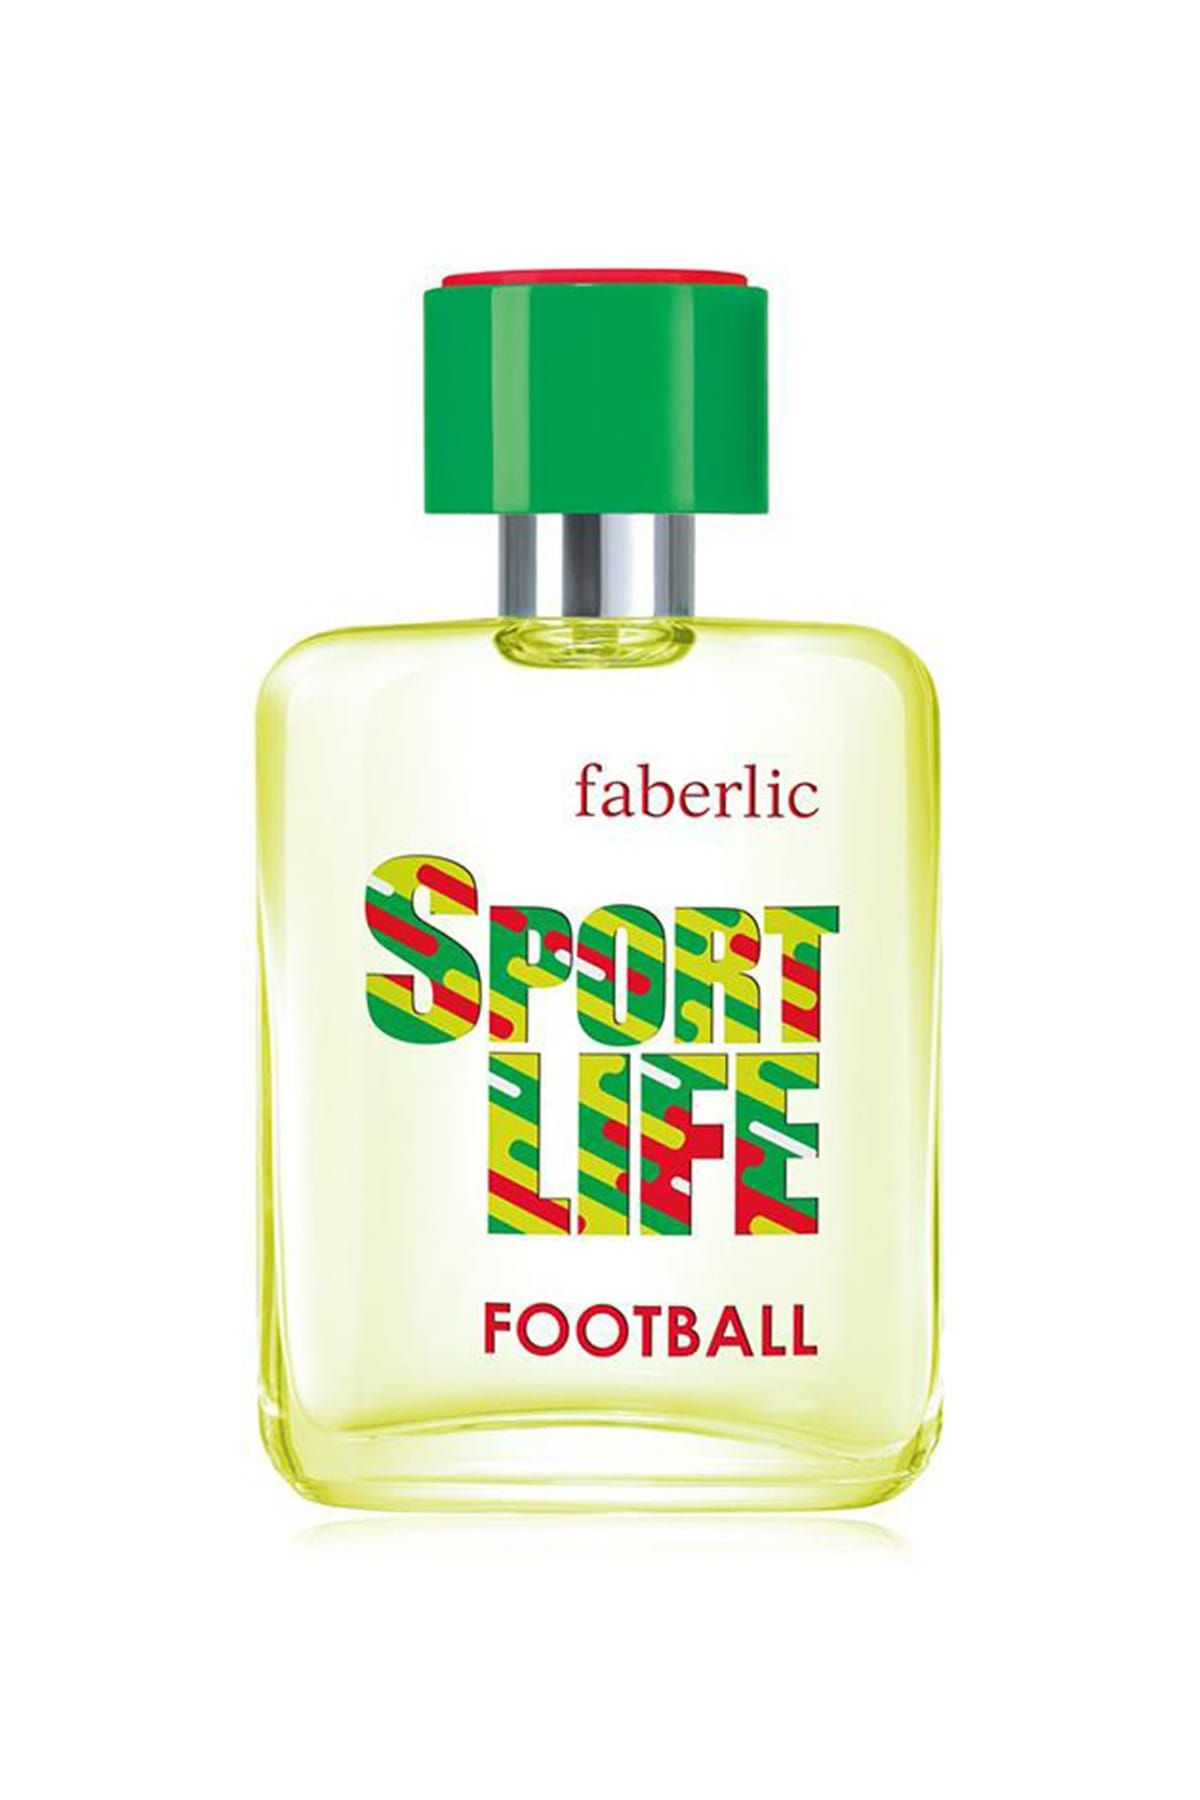 Faberlic Sportlife Football ادوتویلت 50 ml عطر مردانه